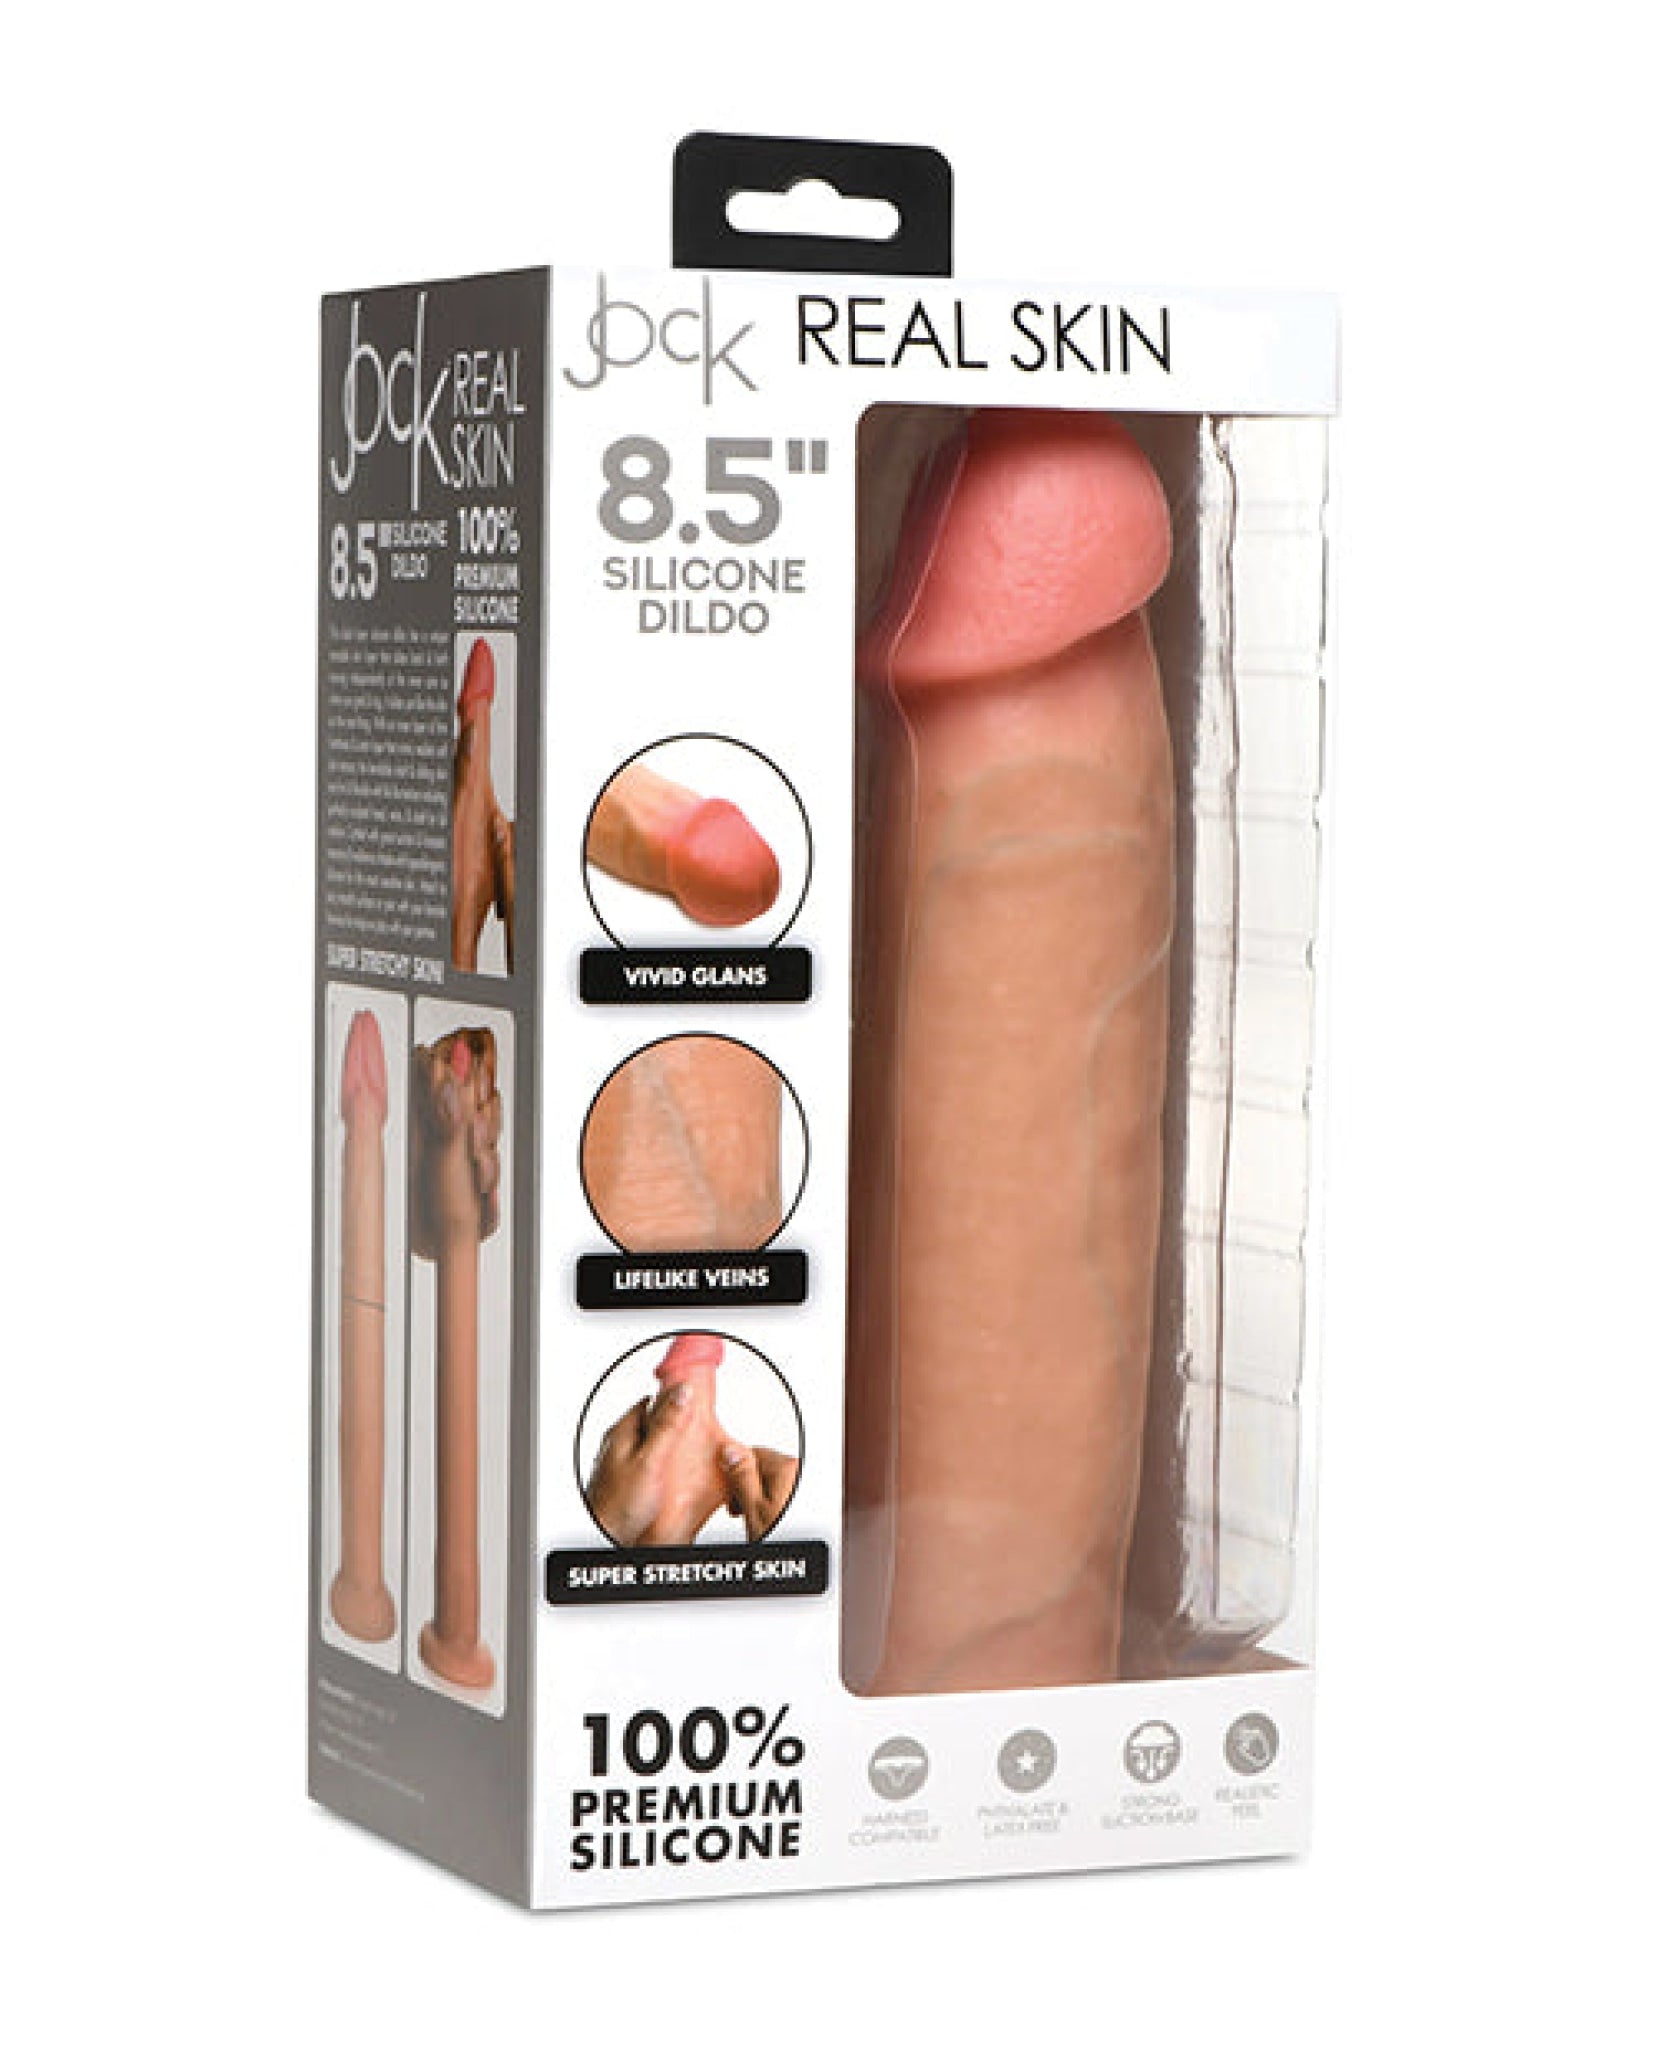 Curve Toys Jock Real Skin Silicone 8.5" Dildo Curve Toys C/o Xr